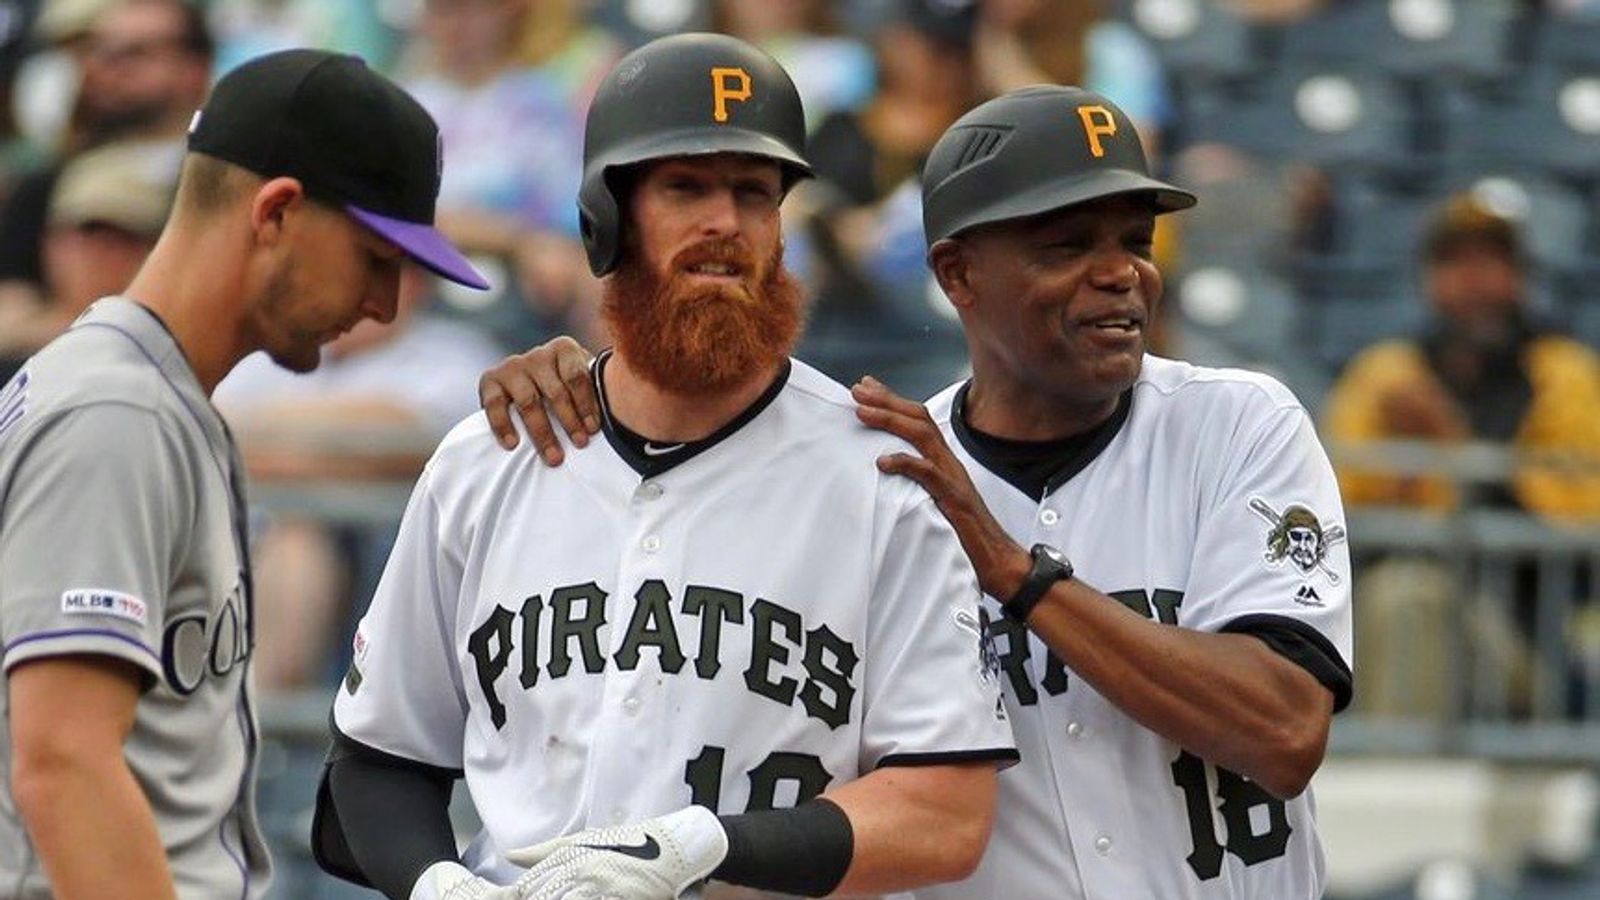 Omar Moreno  Pittsburgh pirates baseball, Pirates baseball, Mlb pirates